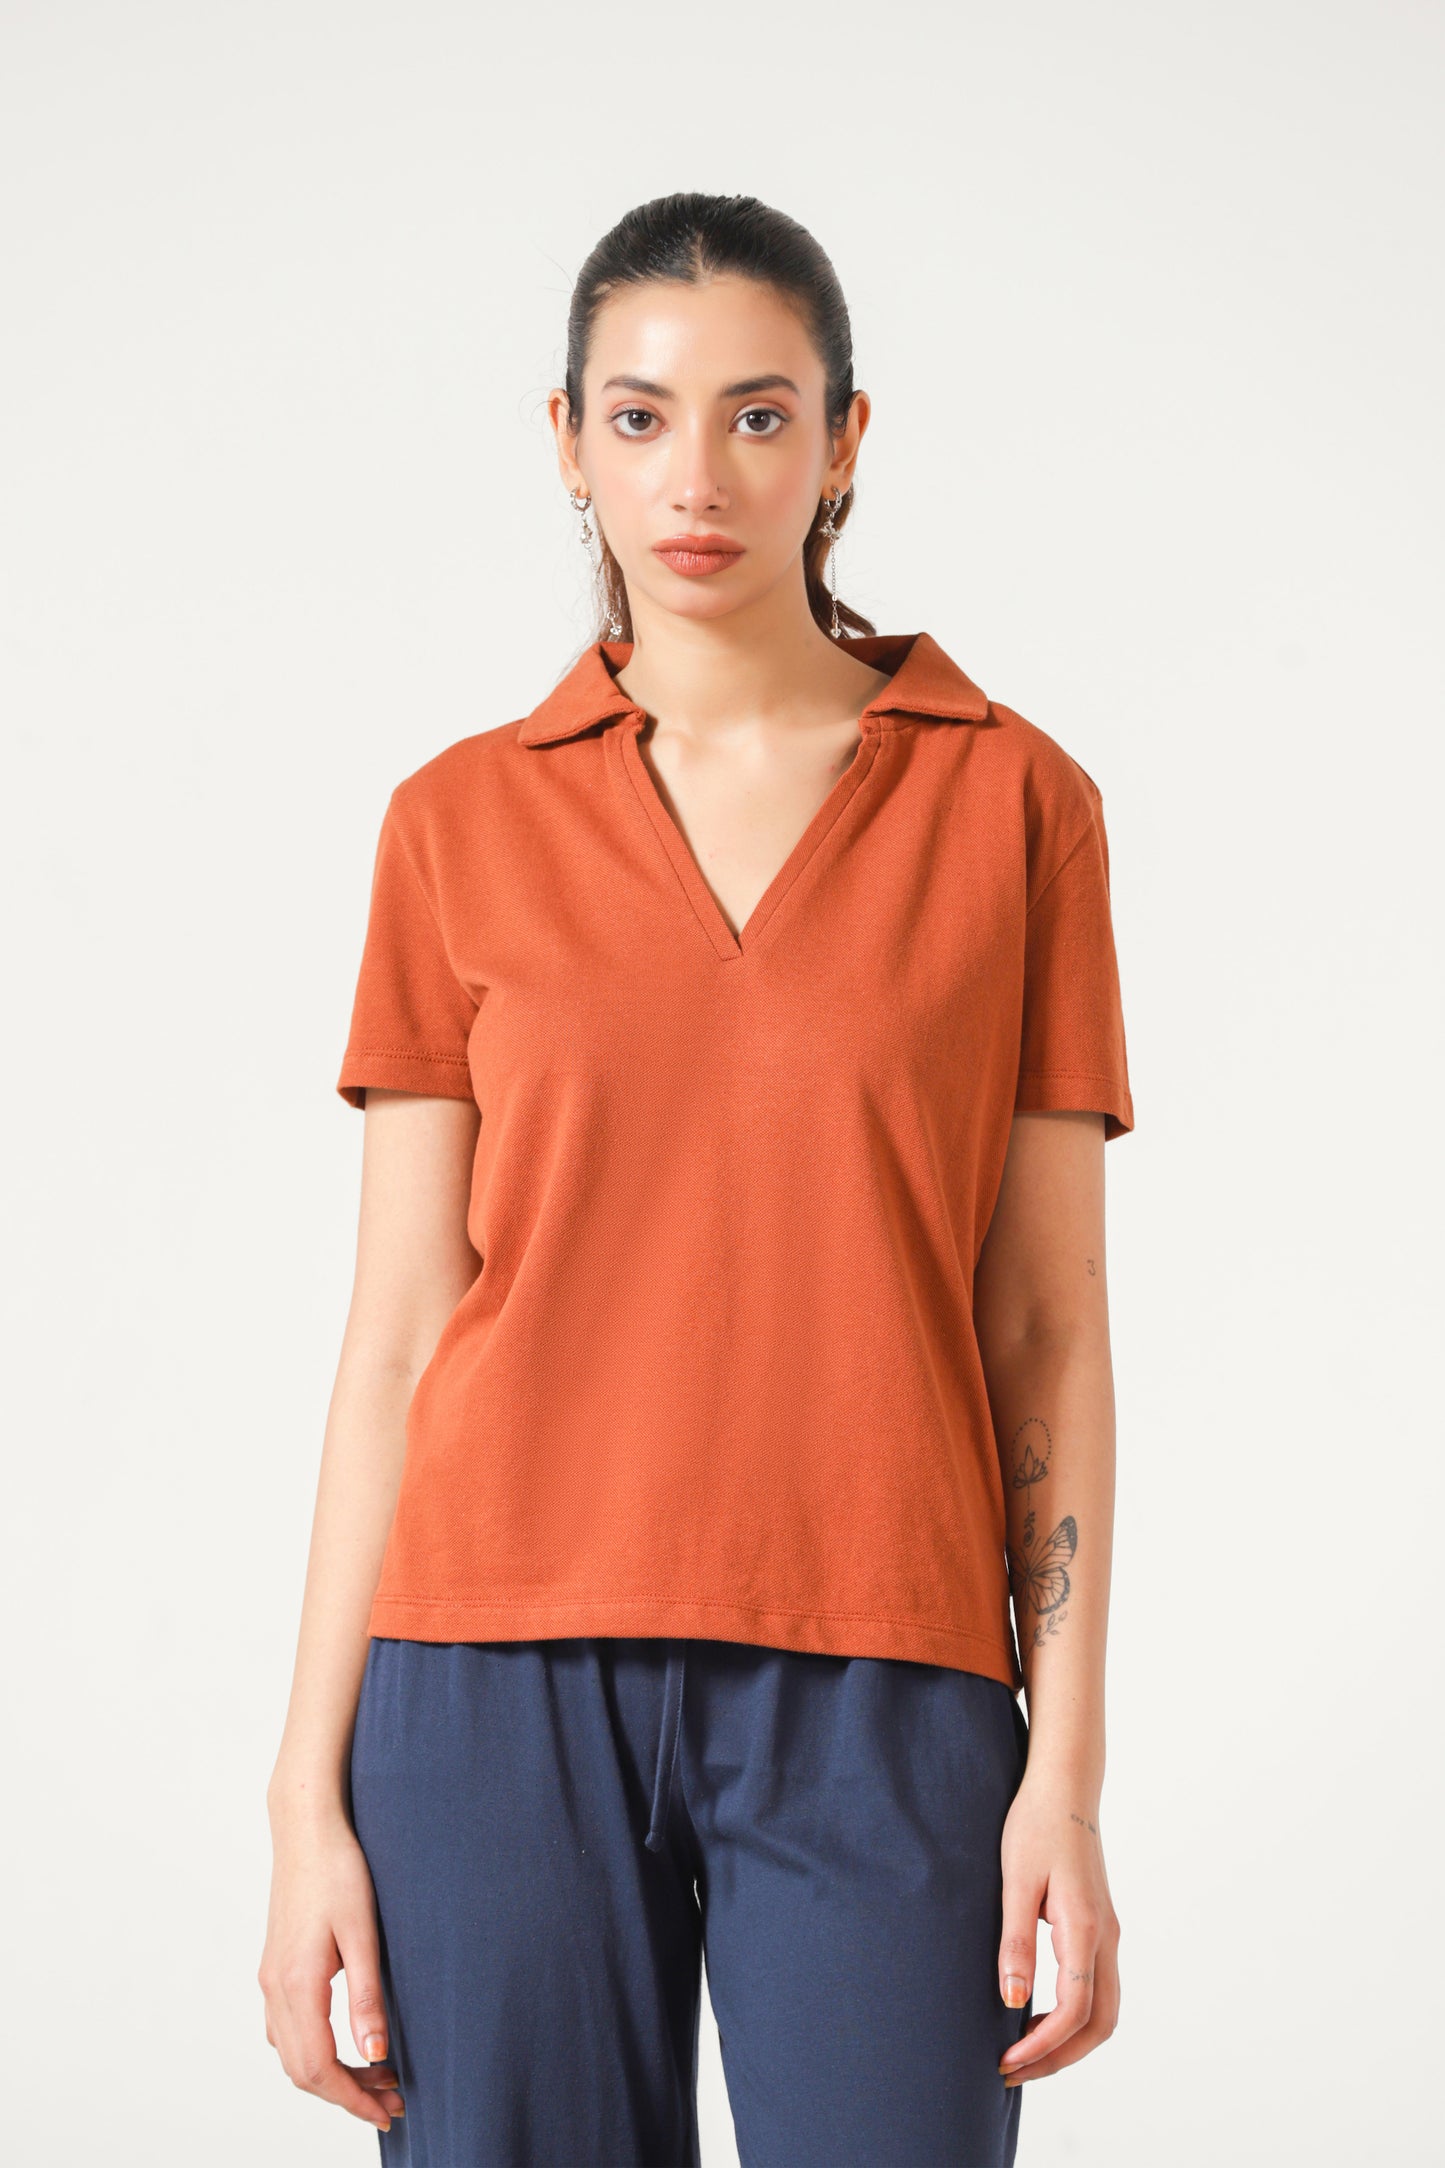 Polo T-shirt in Citrus Orange